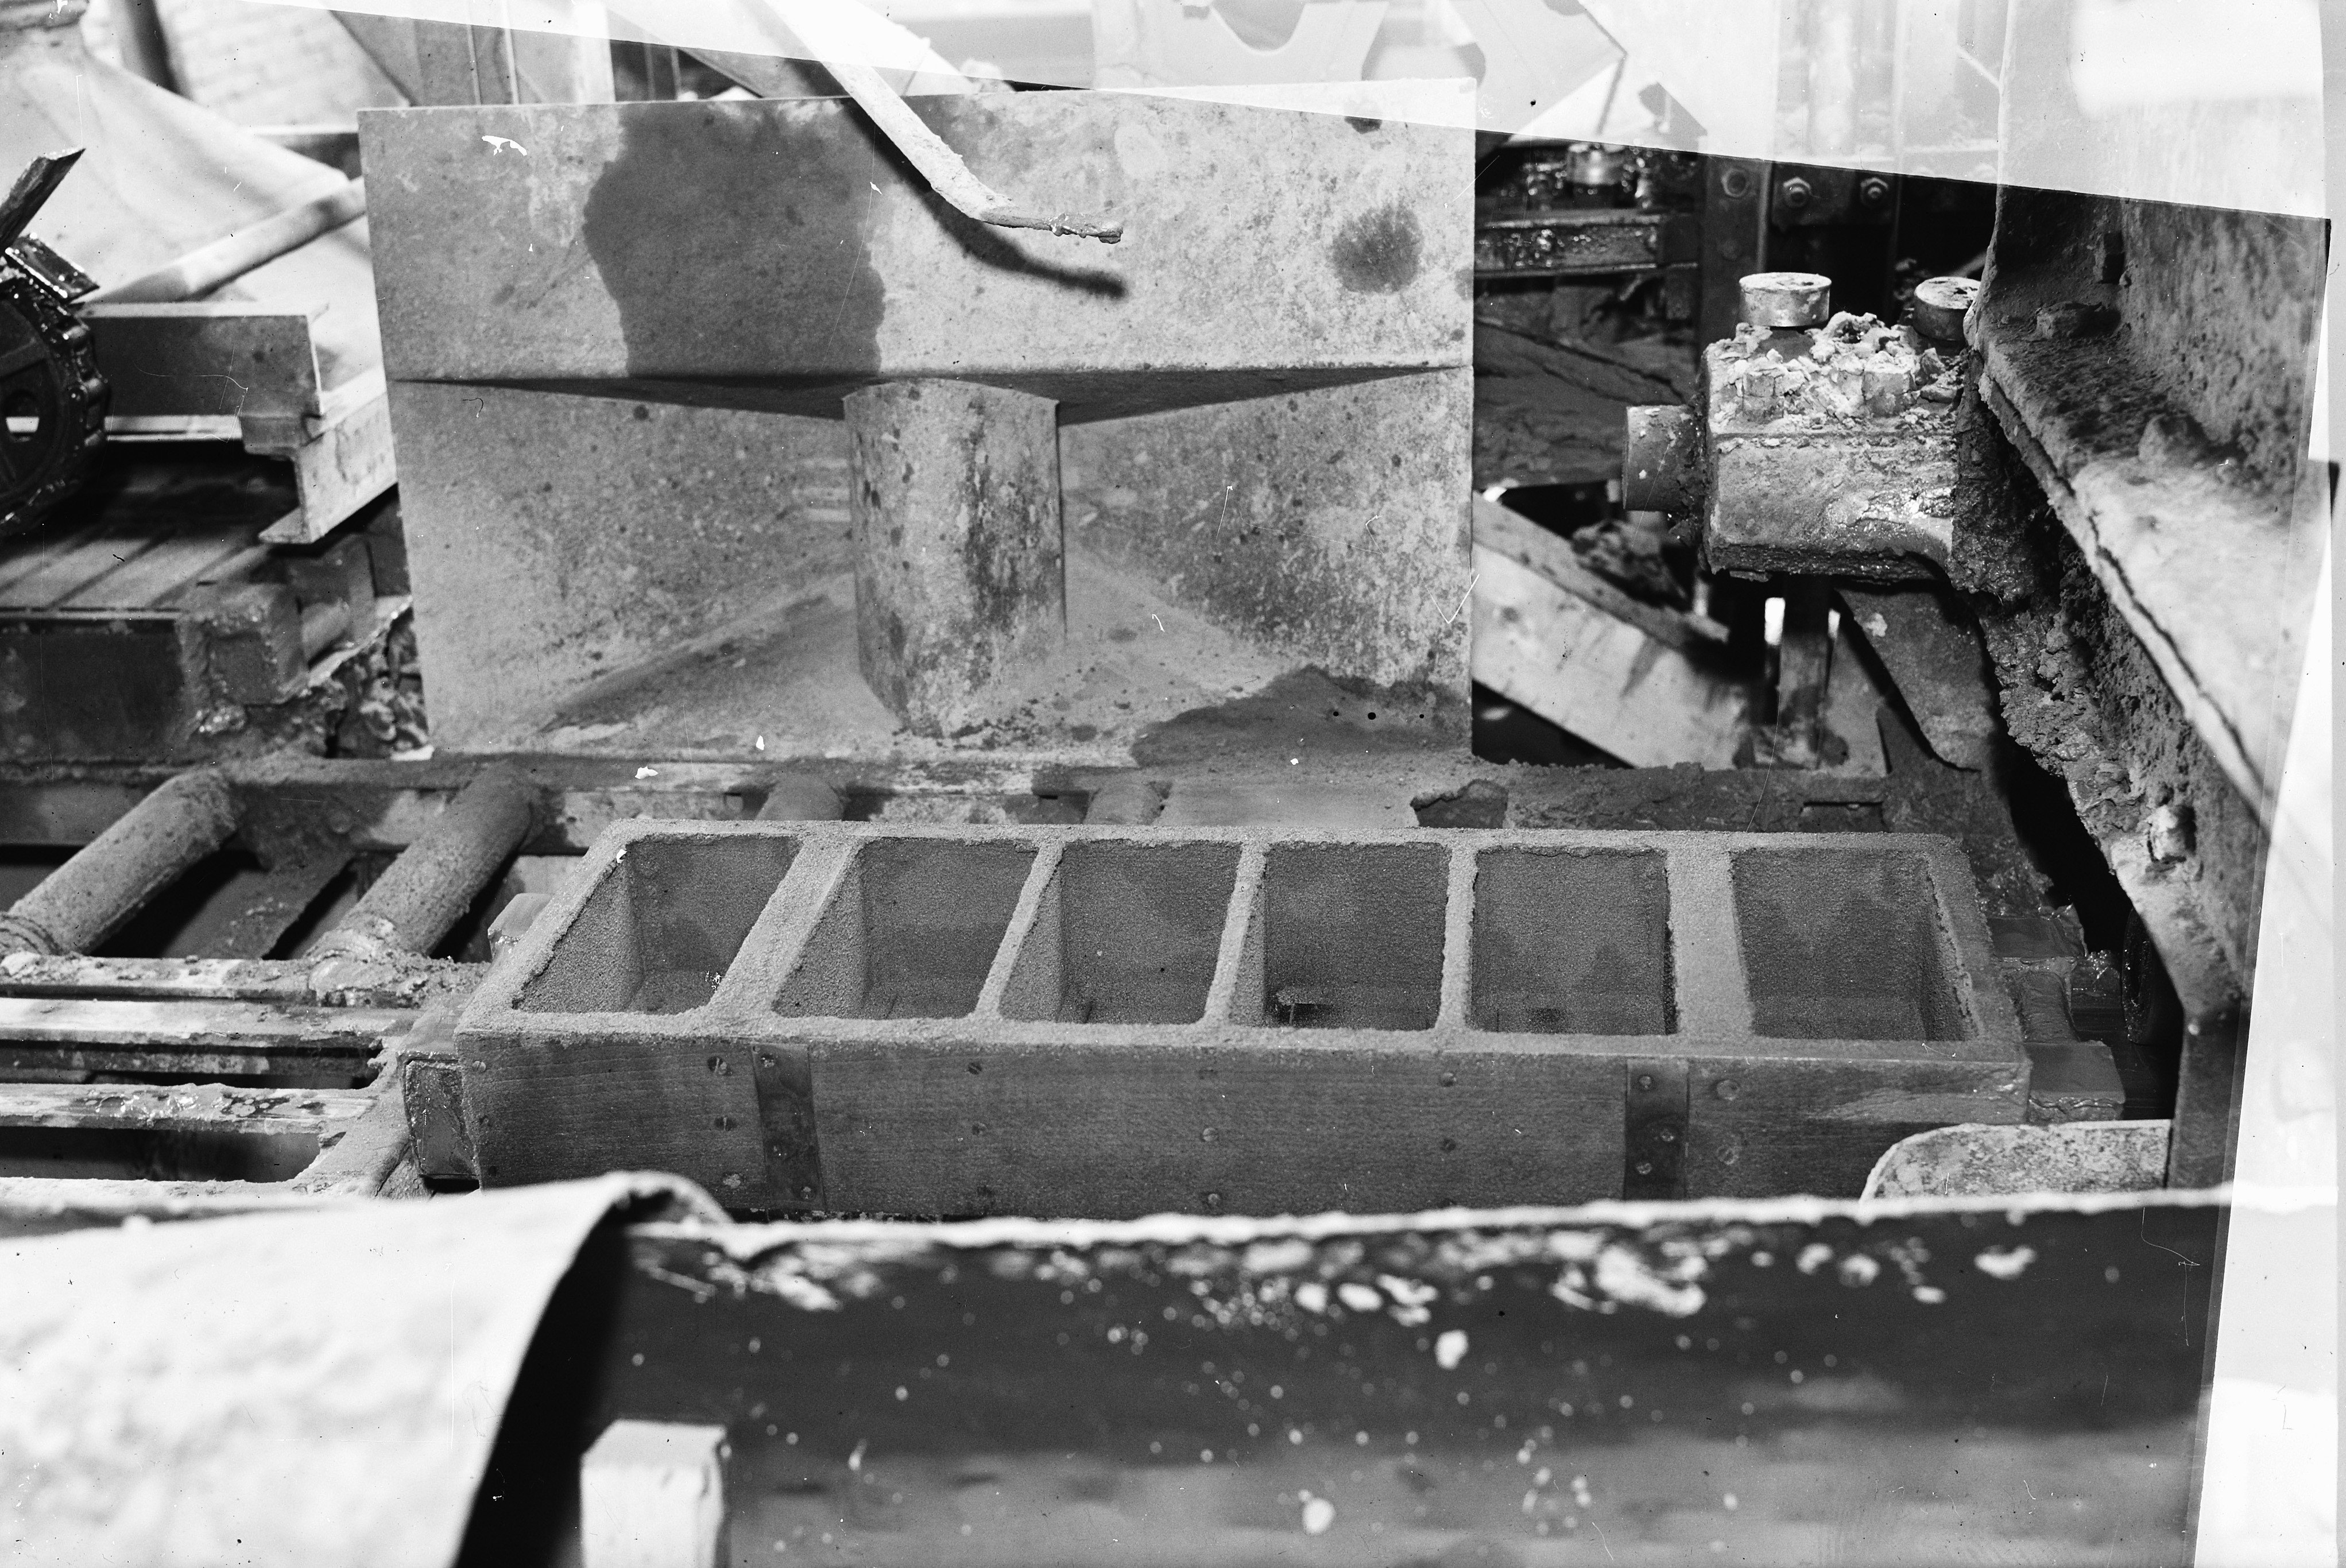 helper Zachtmoedigheid spek File:10x15 Stofafzuiging op automatische bezander in steenfabriek De  Wolfswaard te , Bestanddeelnr 256-0779.jpg - Wikimedia Commons